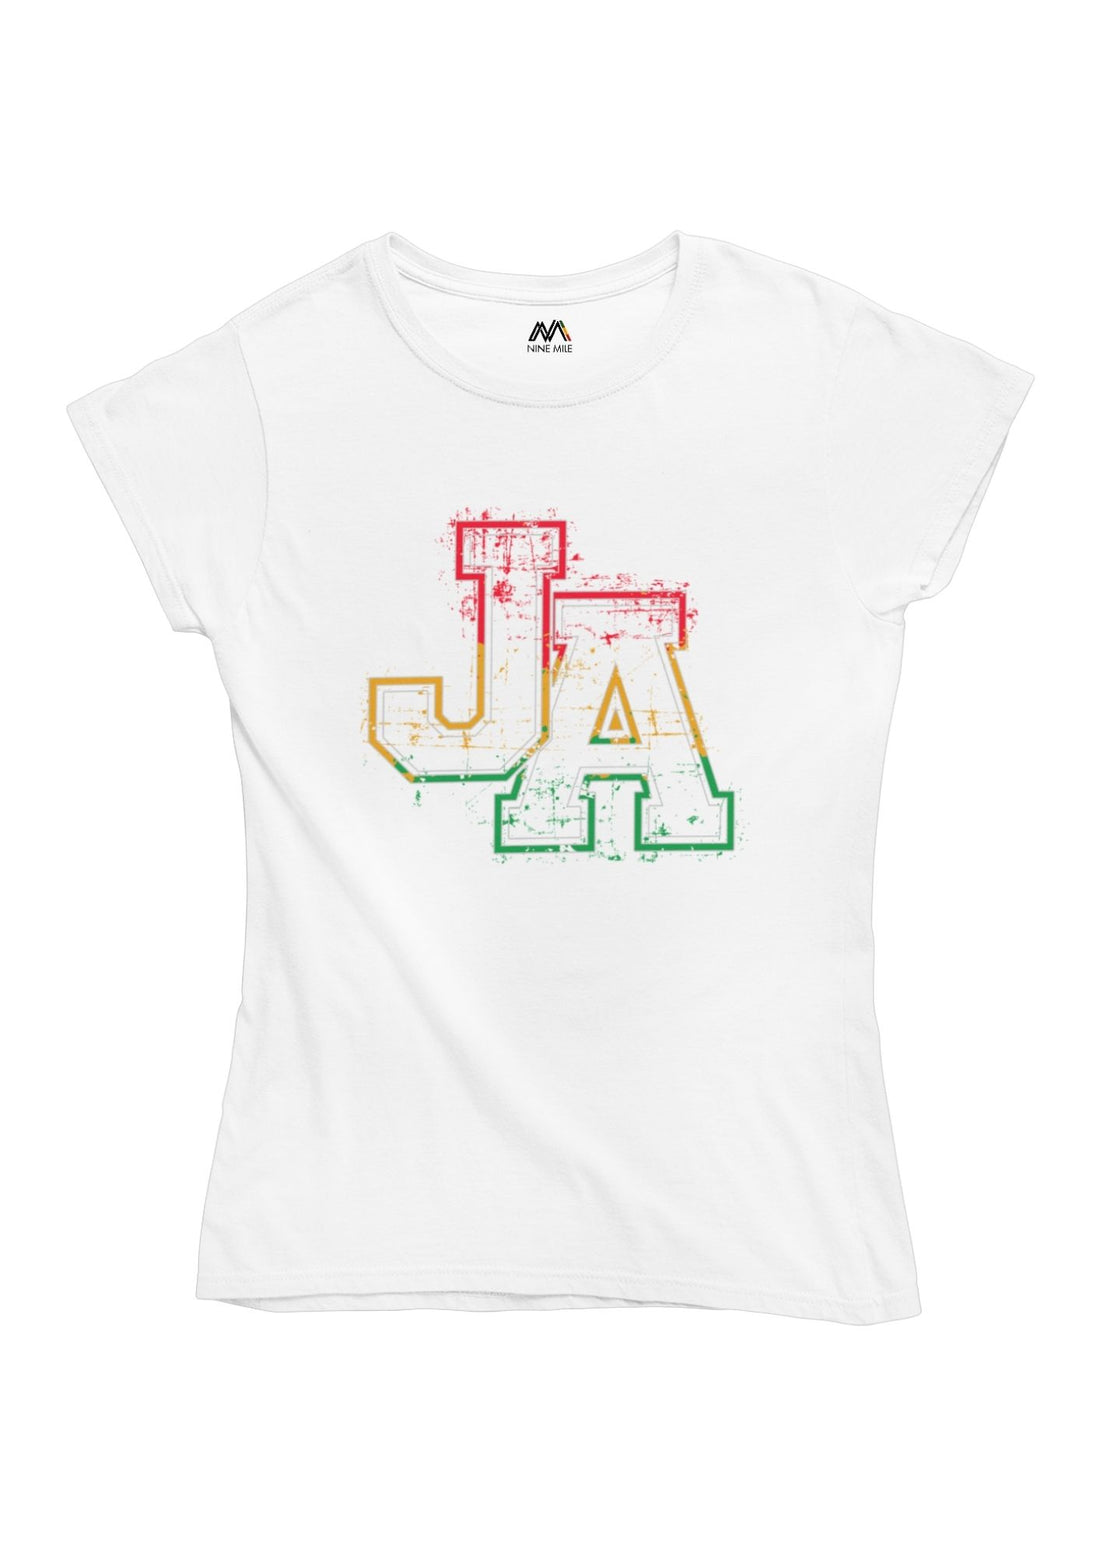 Nine Mile 'JA' Jamaican Reggae Graphic T-Shirt - Nine Mile Clothing 